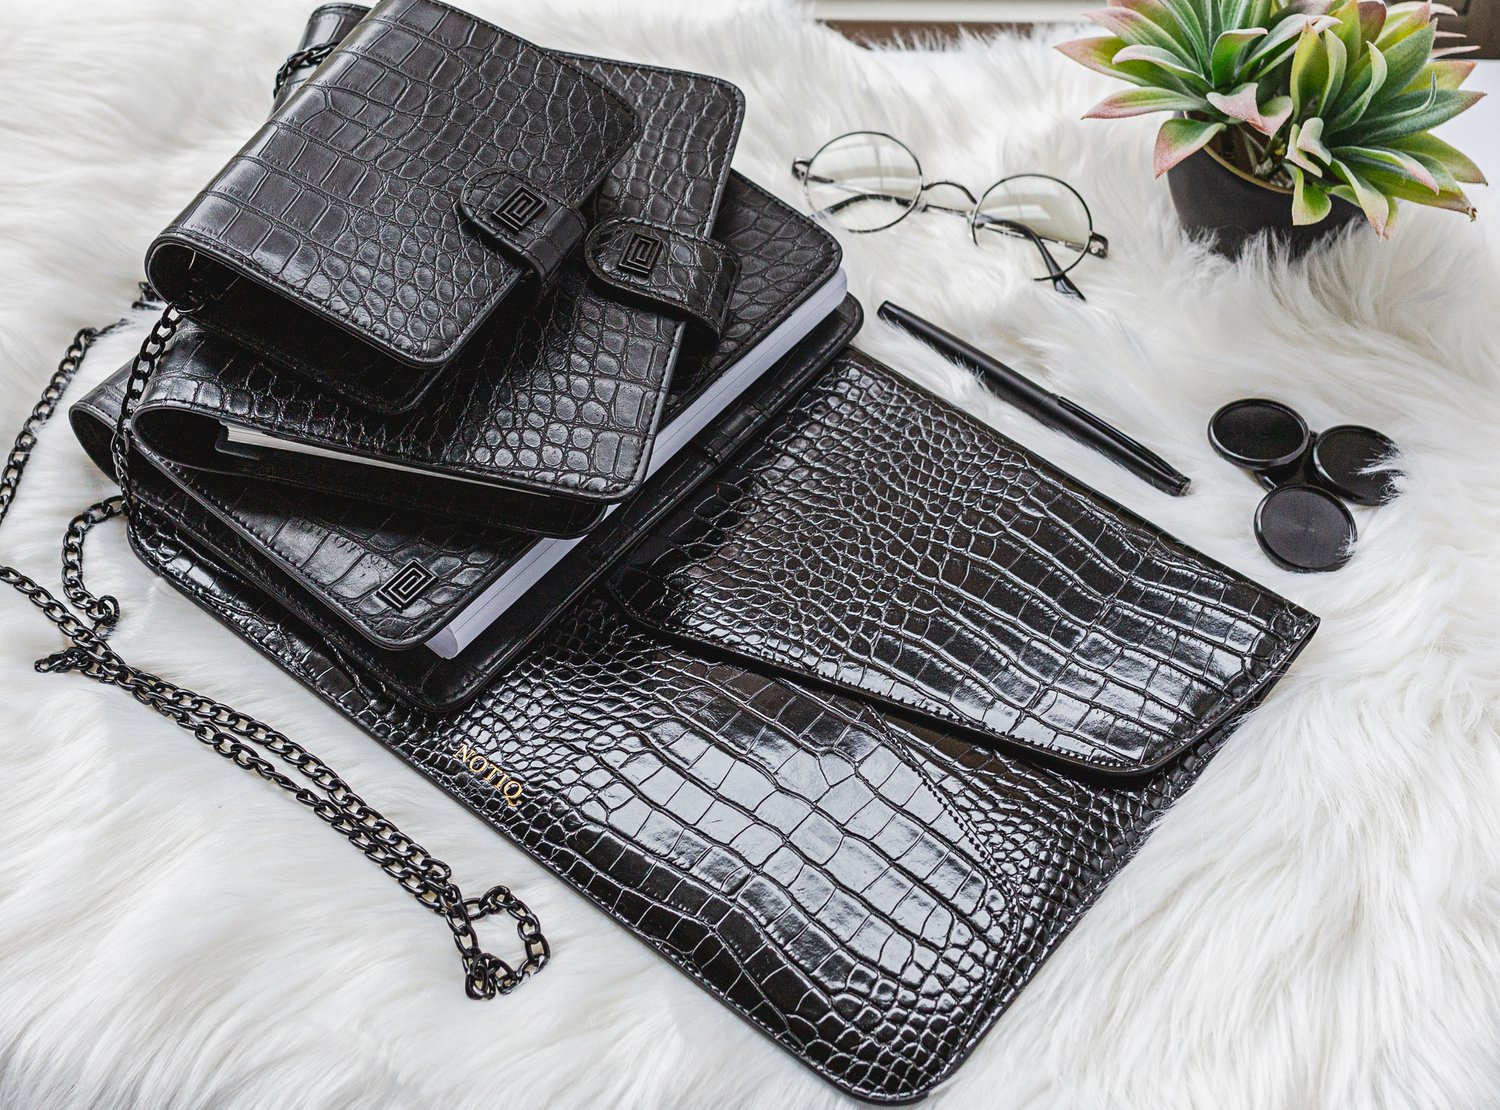 Luxury vegan leather black croco laptop case and agendas.